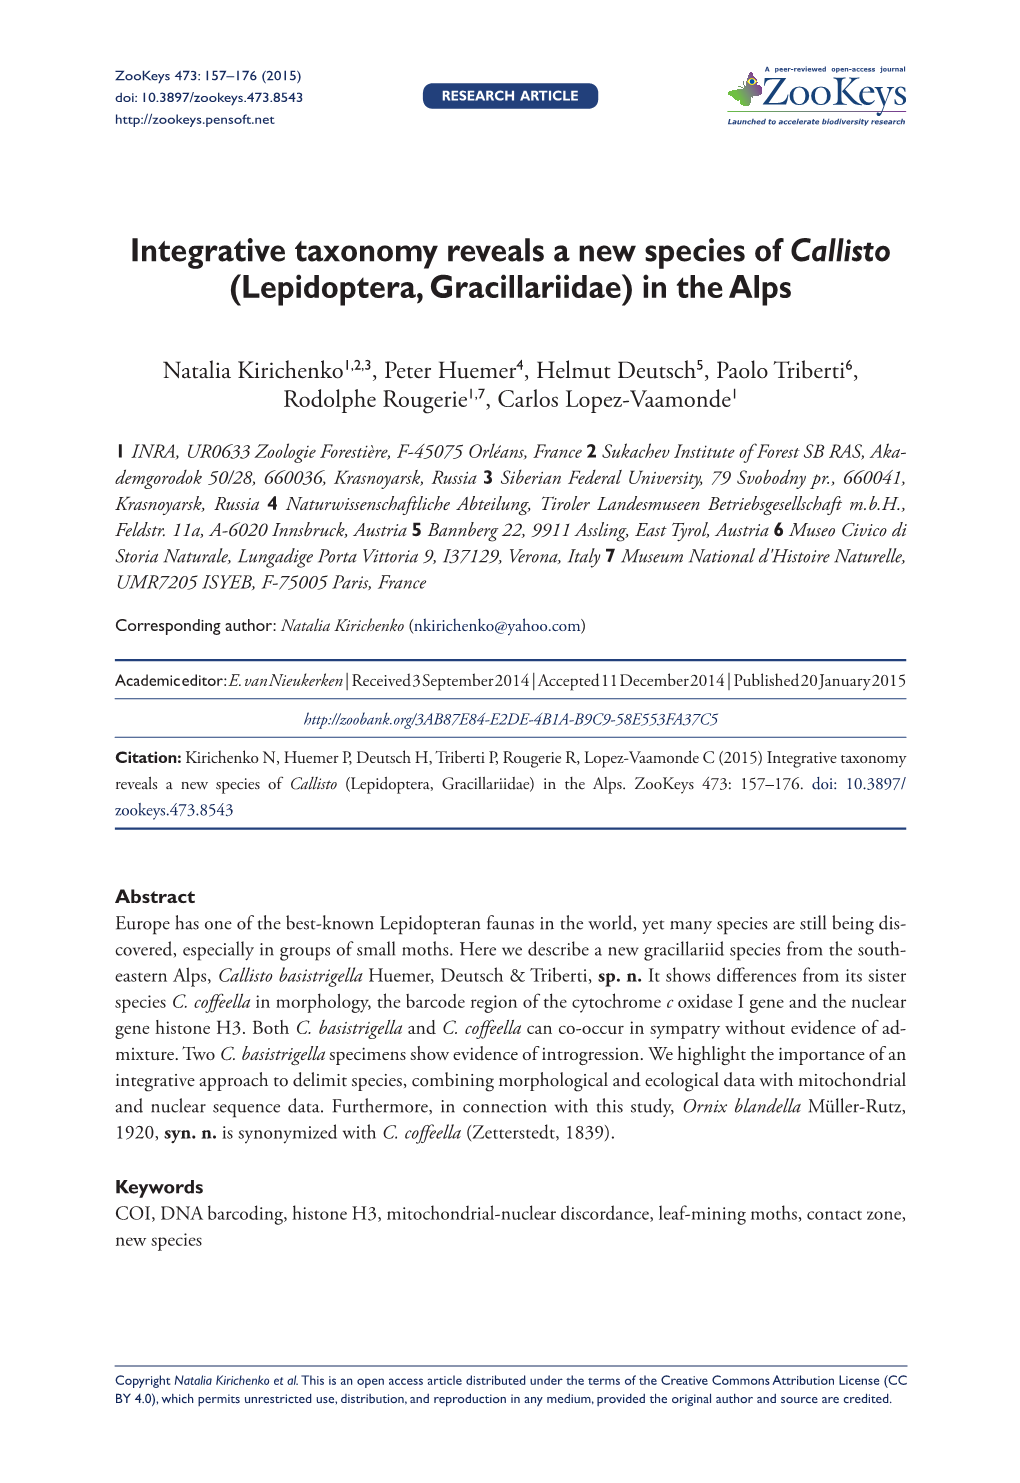 ﻿Integrative Taxonomy Reveals a New Species of Callisto (Lepidoptera